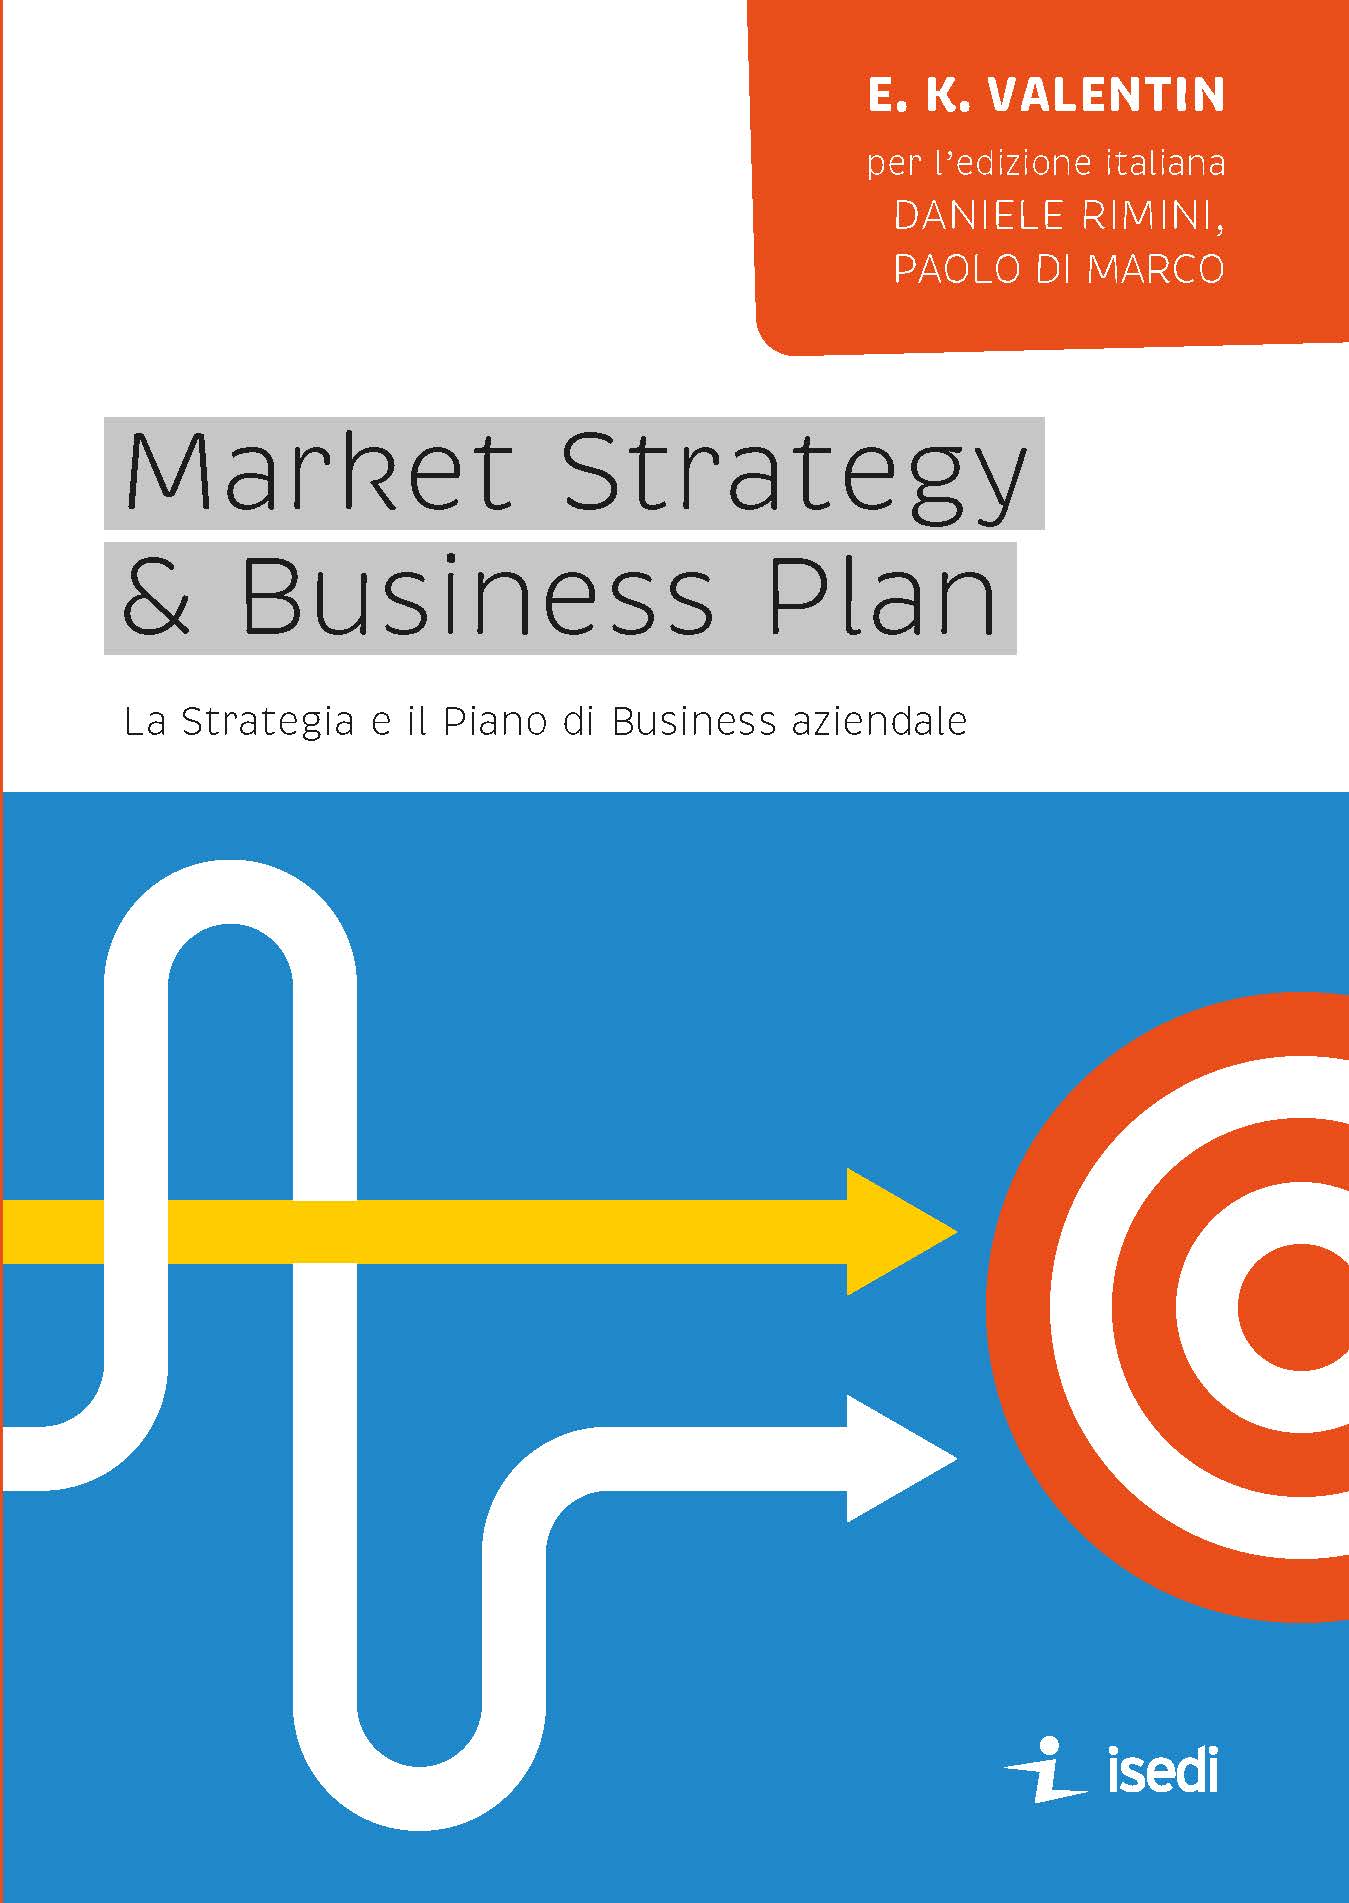 Marketing Strategy & Business Plan